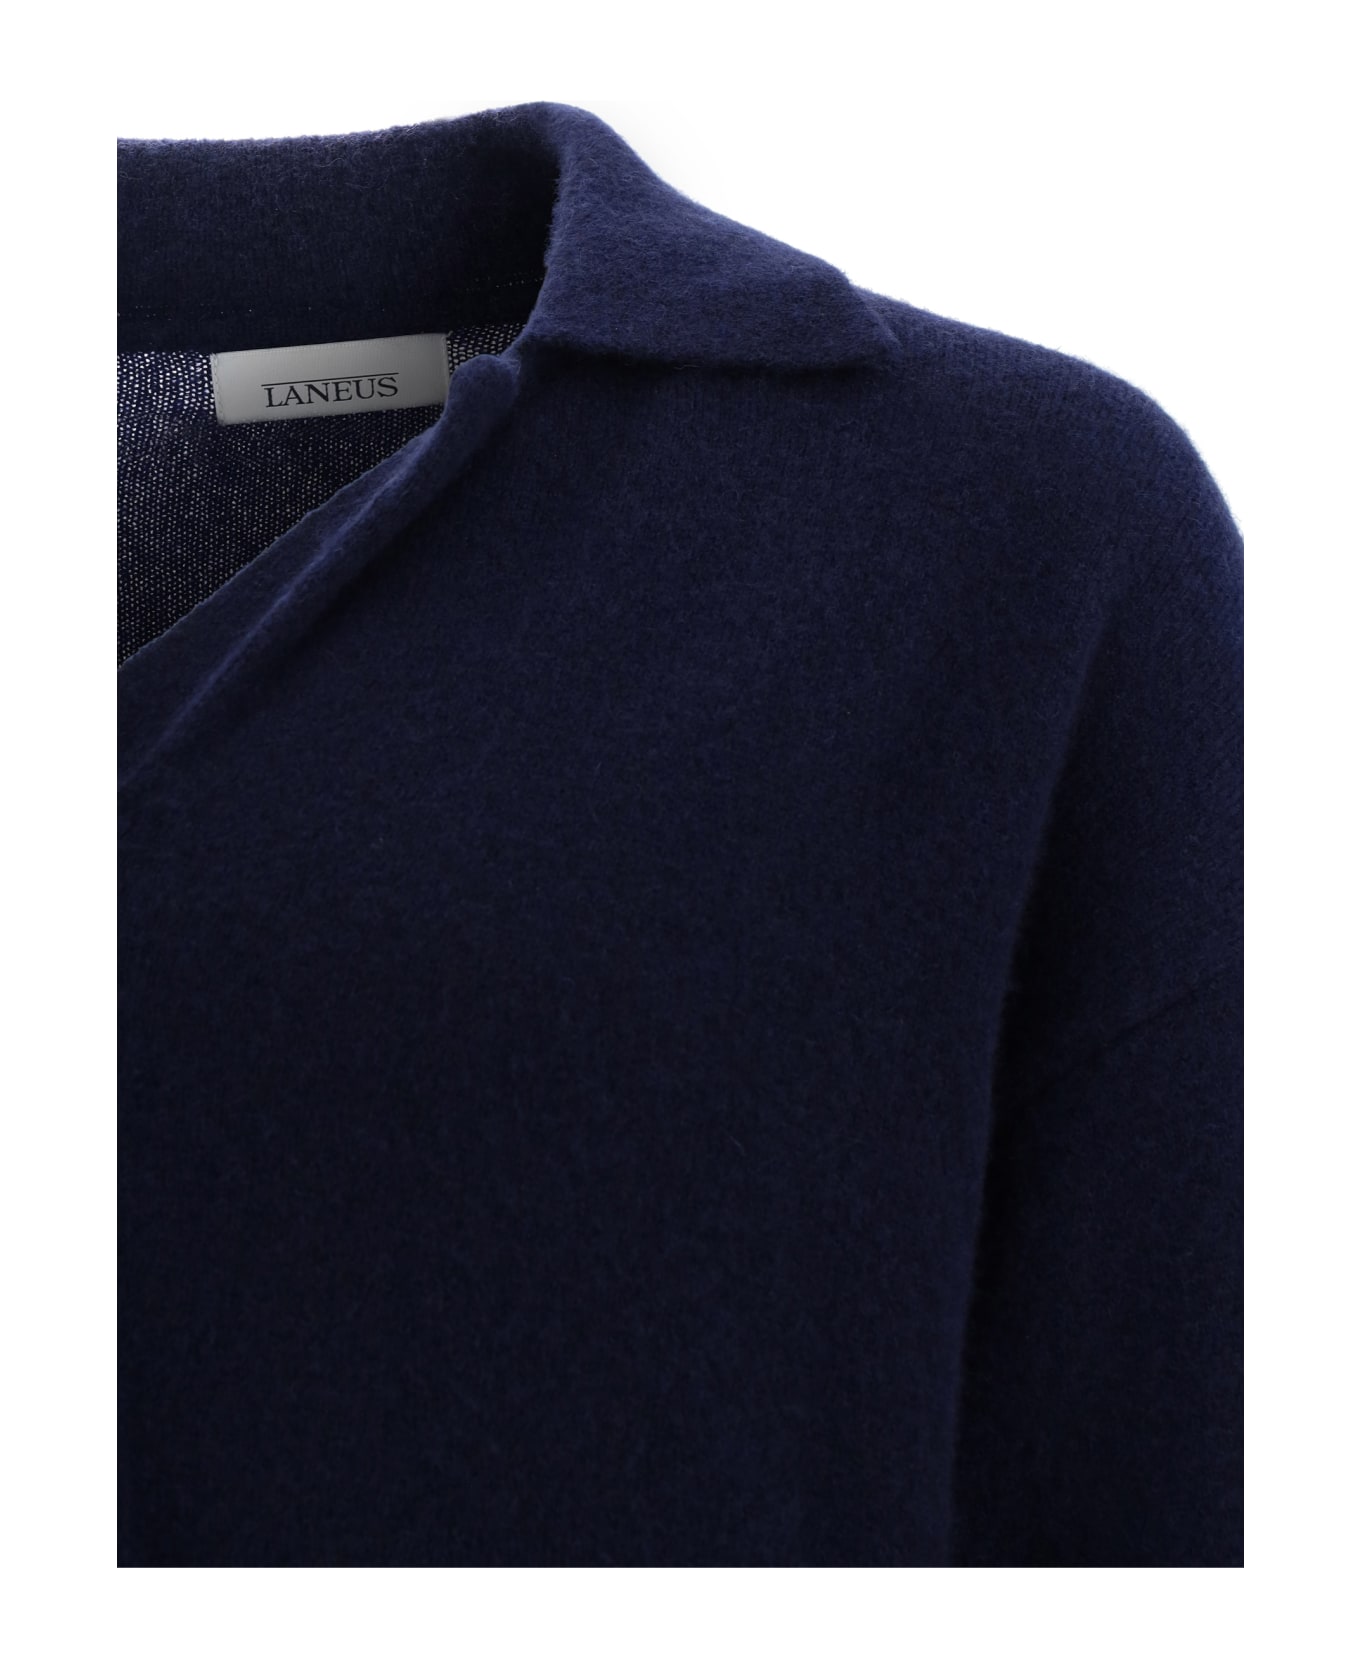 Laneus Sweater - Blu Navy ニットウェア